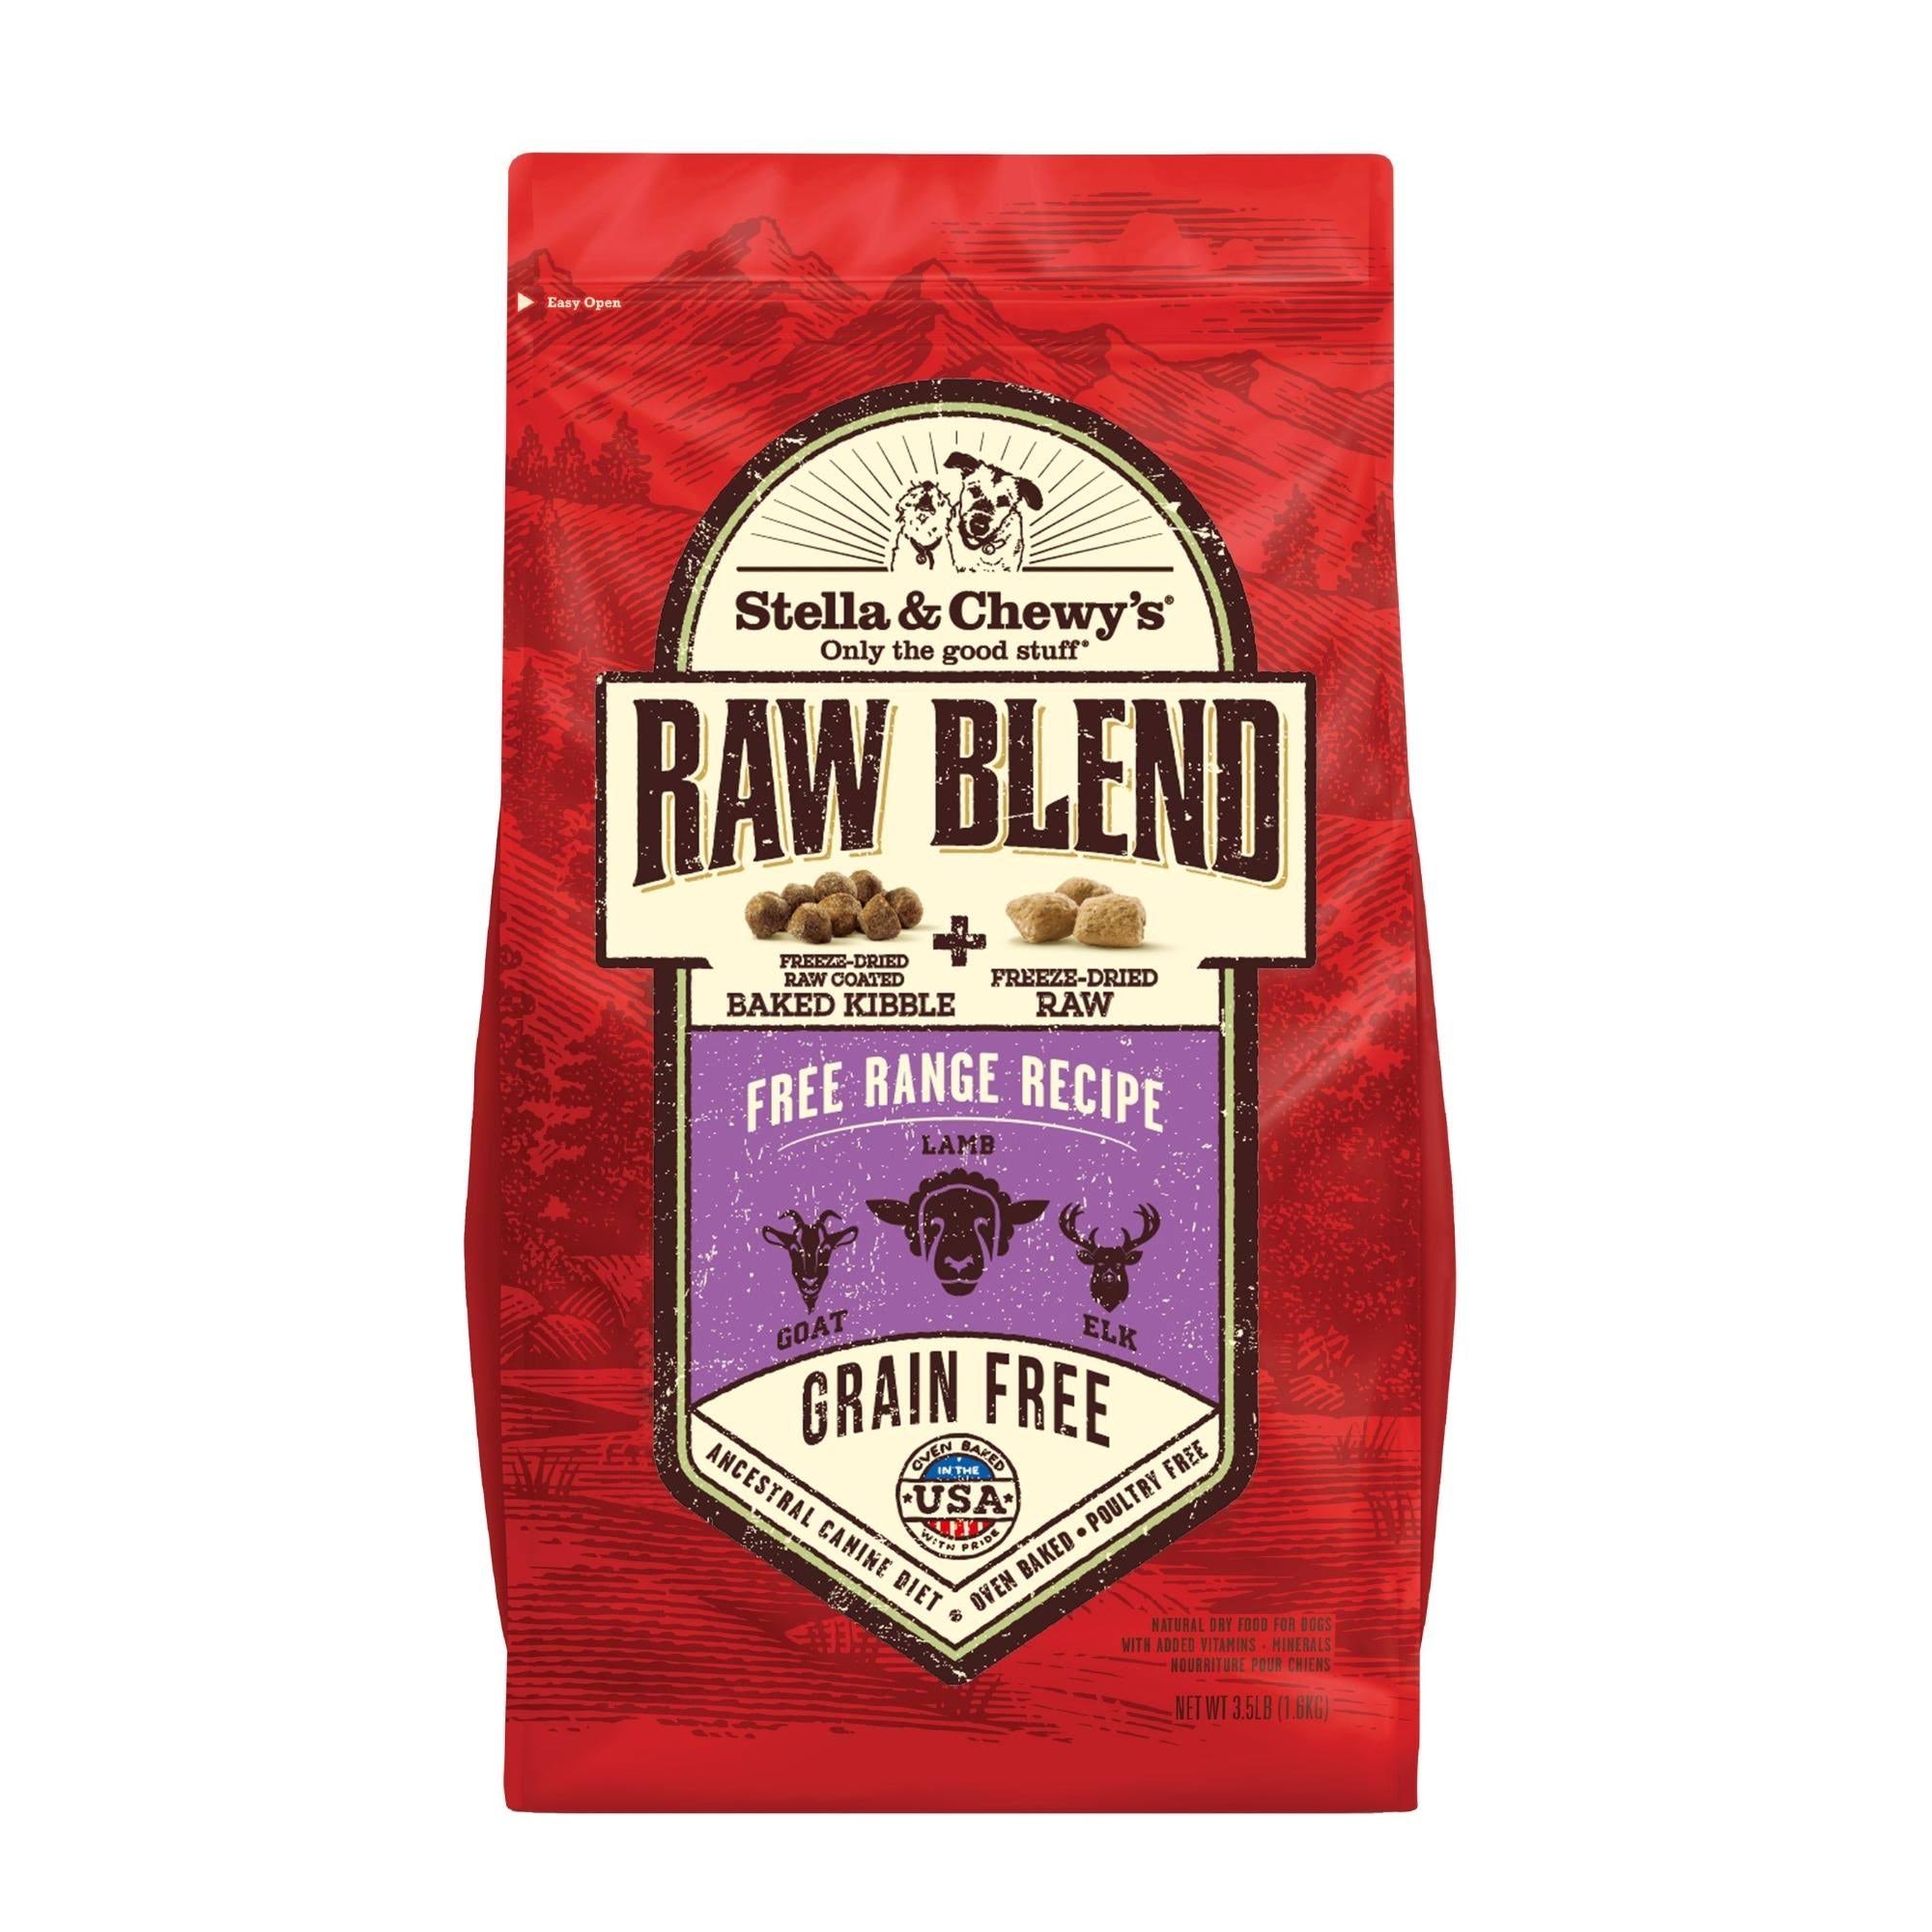 Stella & Chewy's Raw Blend Free Range Recipe Dog Food, 3.5 LB